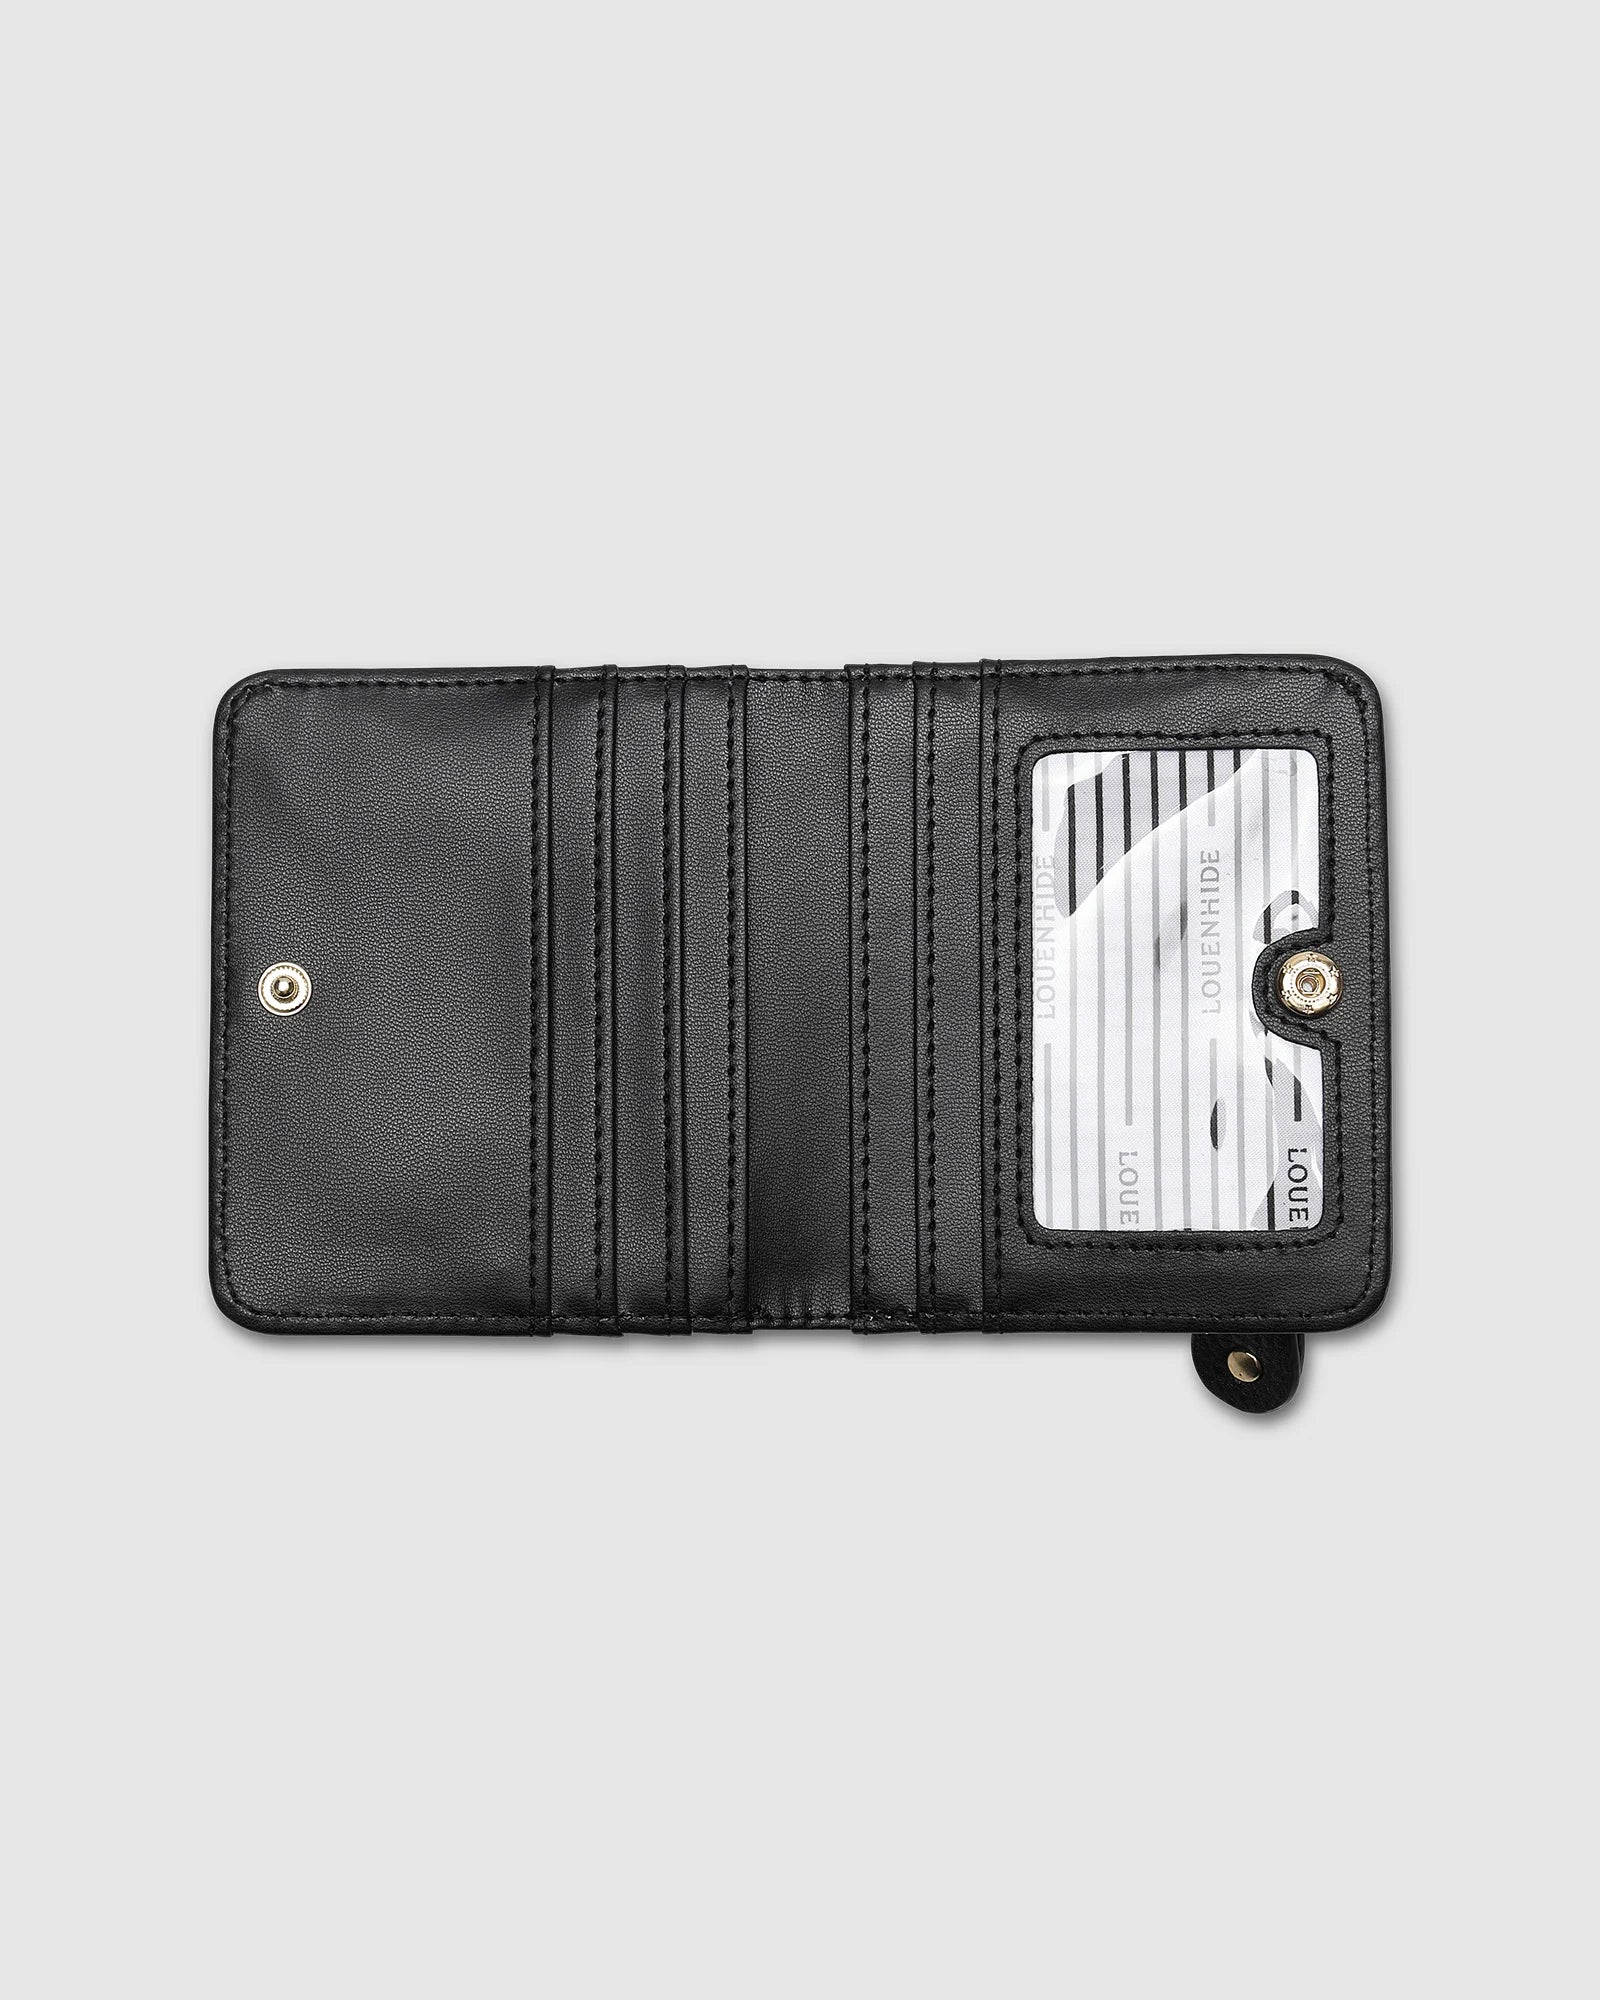 Louenhide Lily Wallet - Black Accessories - Other Accessories - Handbags & Wallets by Louenhide | Grace the Boutique